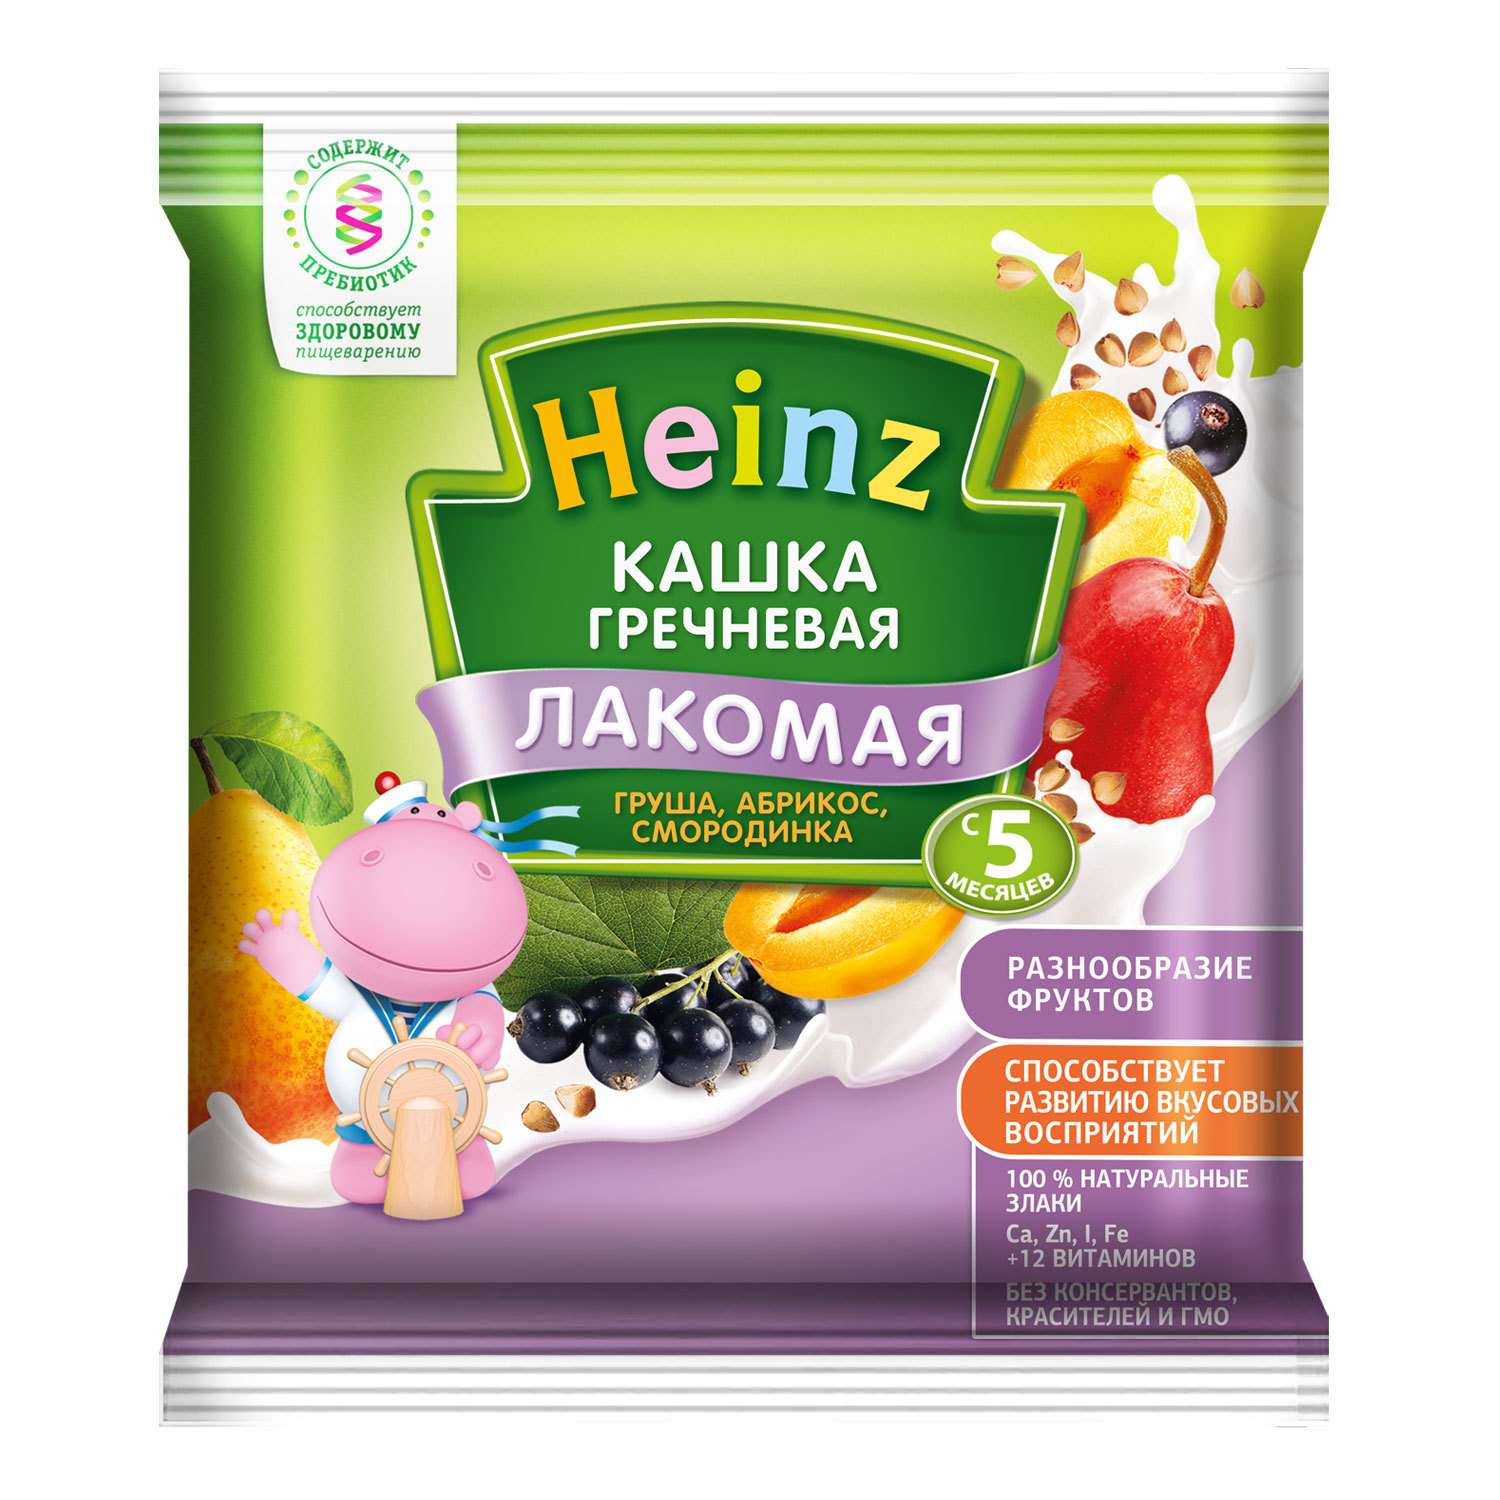 Каша Heinz молочная гречневая груша,абрикос,черная смородина 30г с 5месяцев - фото 1